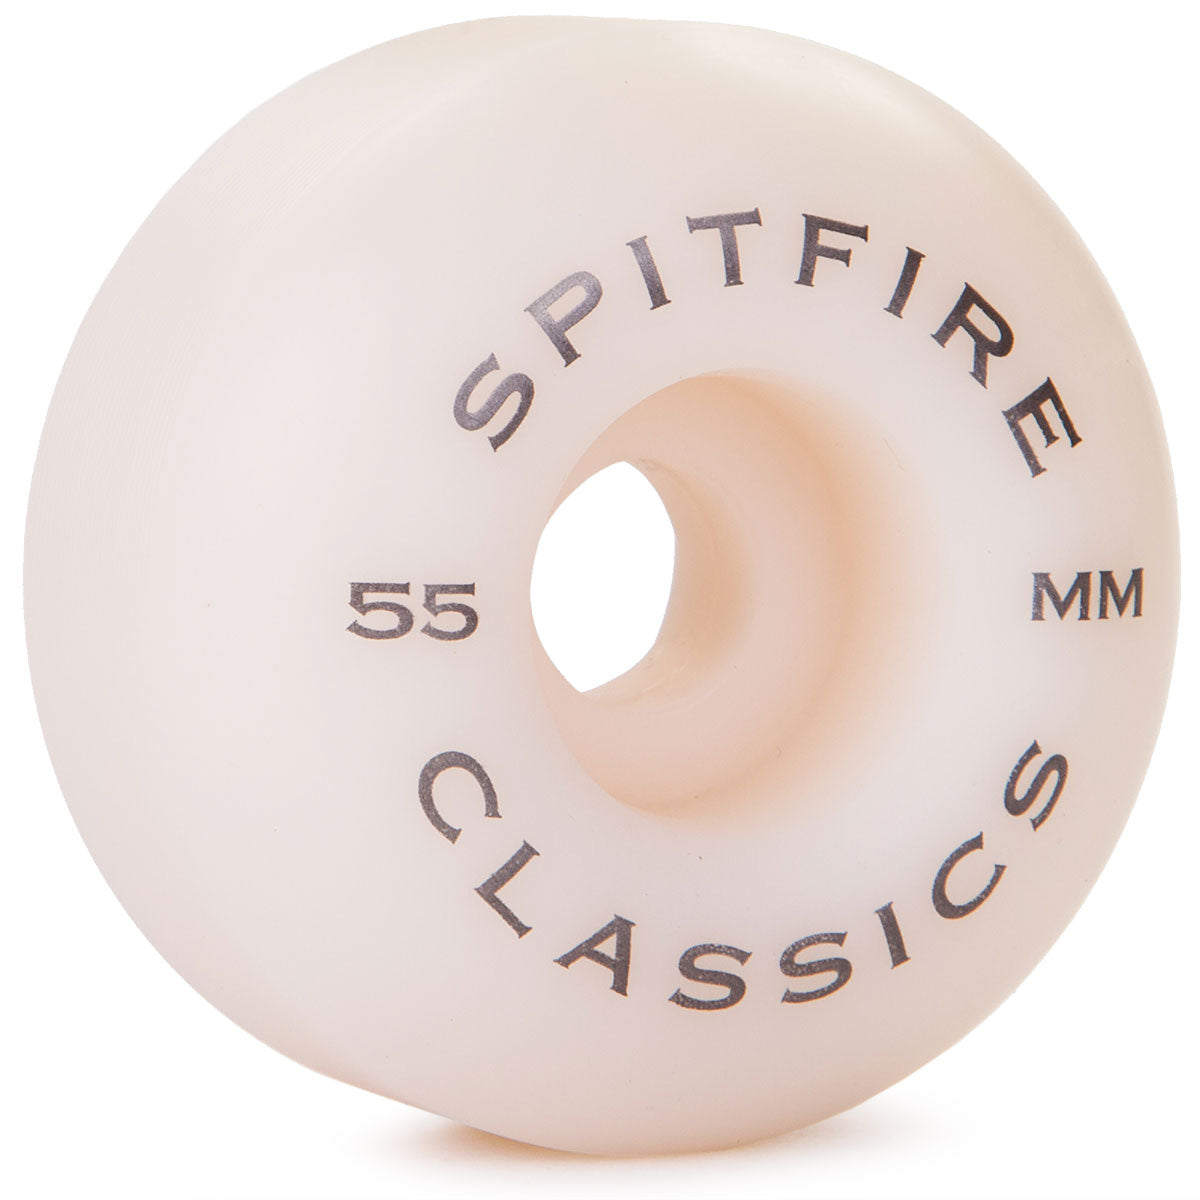 Spitfire Classics Skateboard Wheels - 55mm image 2